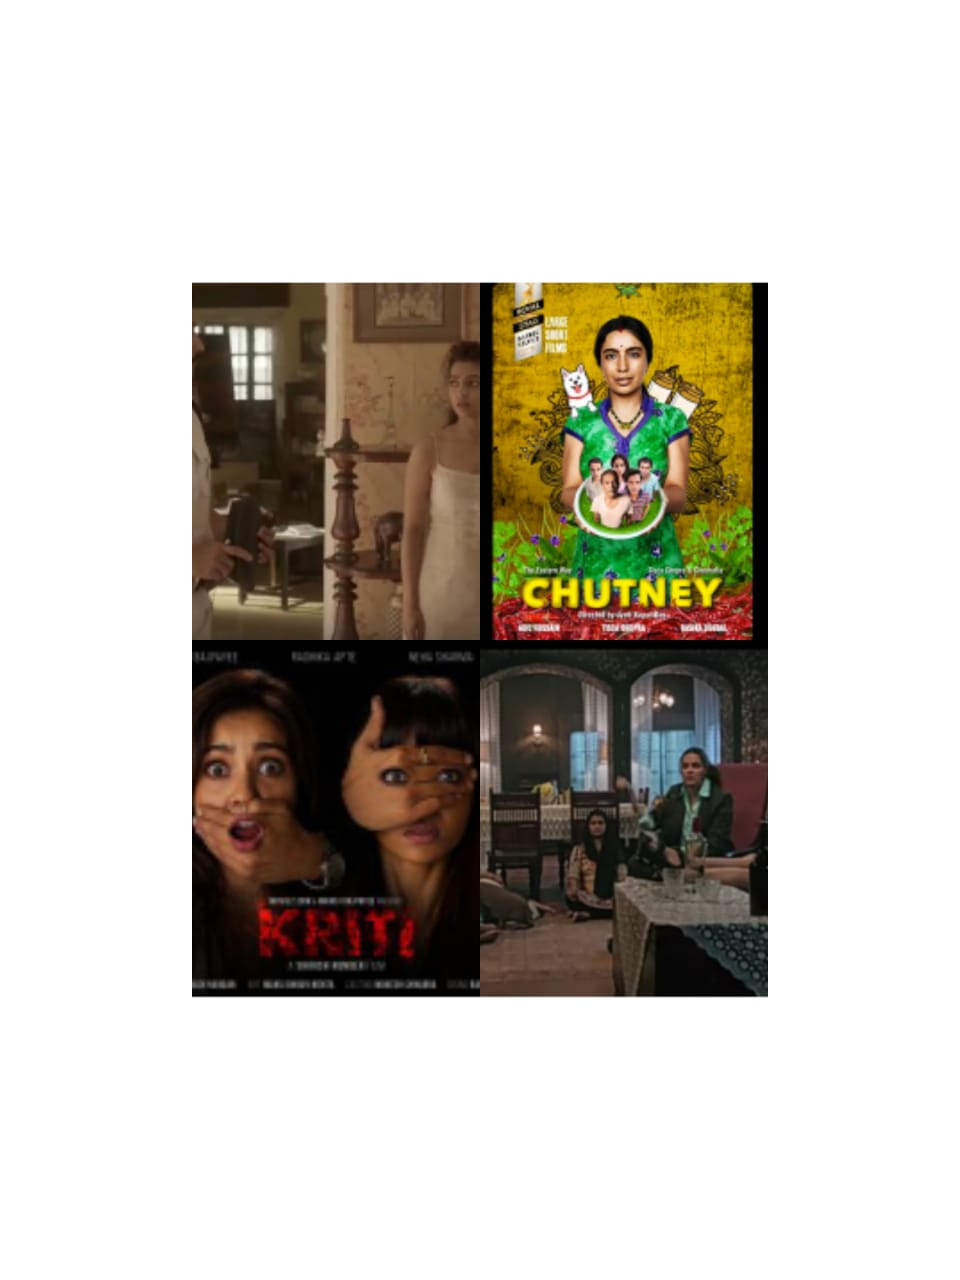 Best Indian Short Films On YouTube